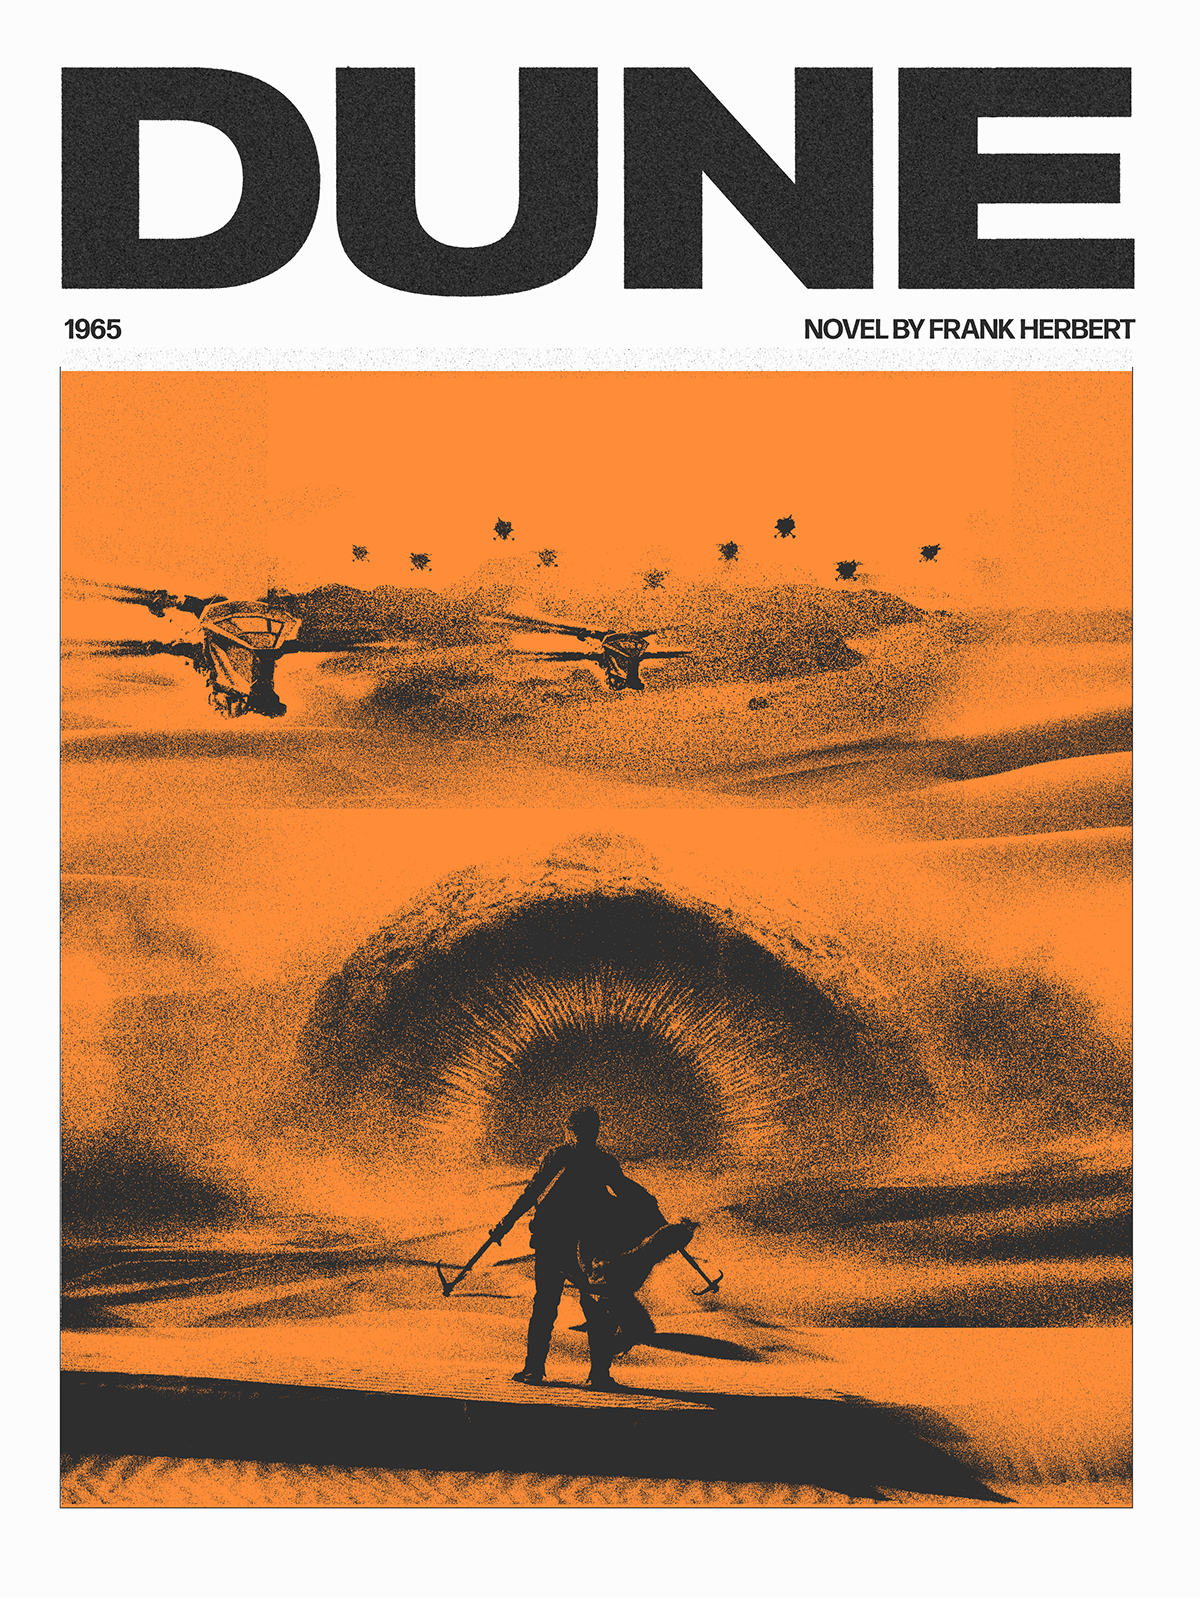 Poster Design dunemovie arrakis frank herbert science fiction sandworm dune Threshold Effect Adobe Photoshop dune part two